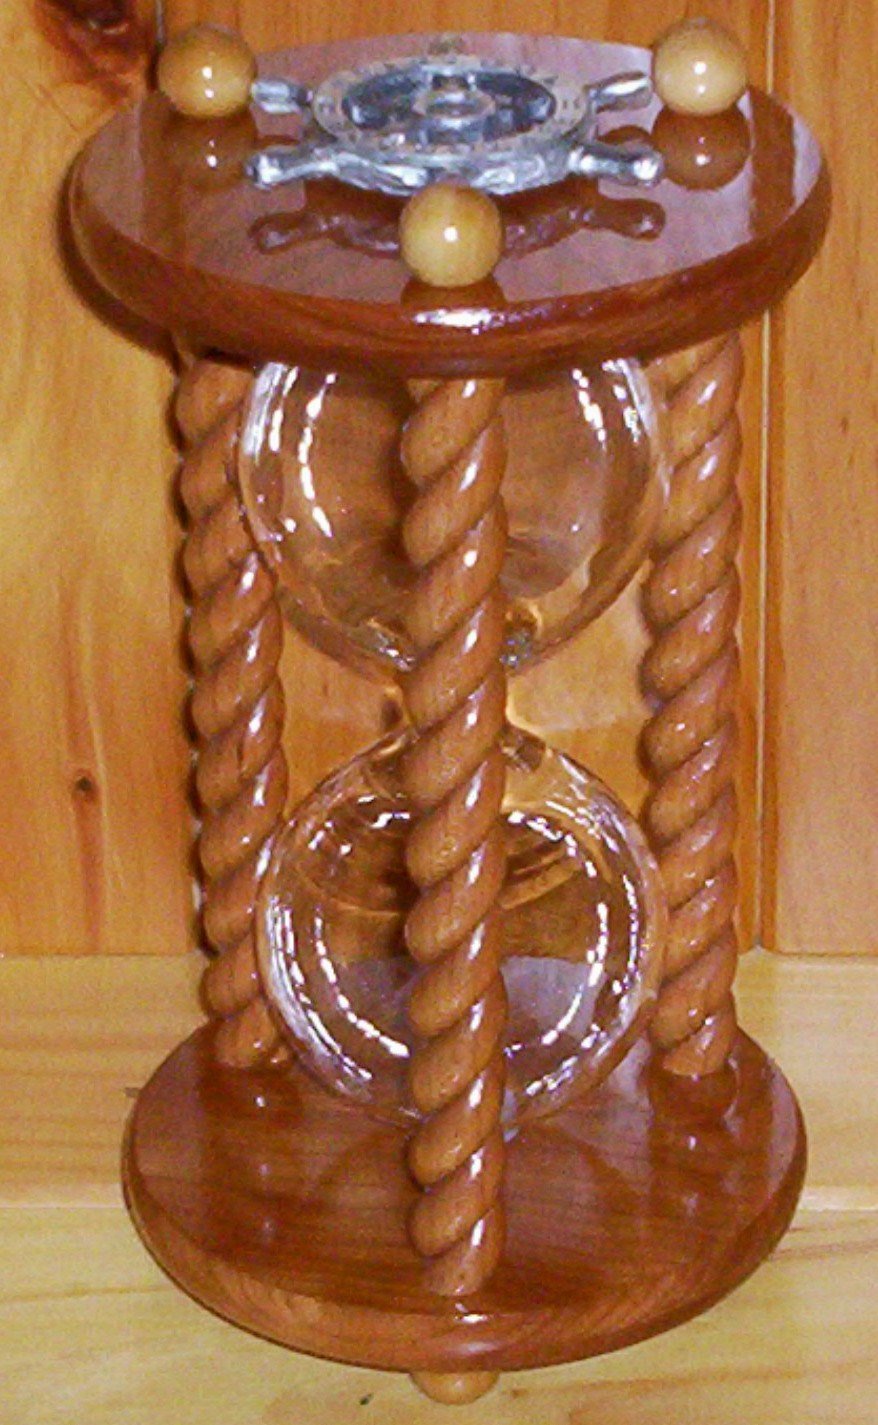 Heirloom Hourglass Unity Sand Ceremony Hourglass The Hearthside Cherry Wedding Unity Sand Ceremony Hourglass